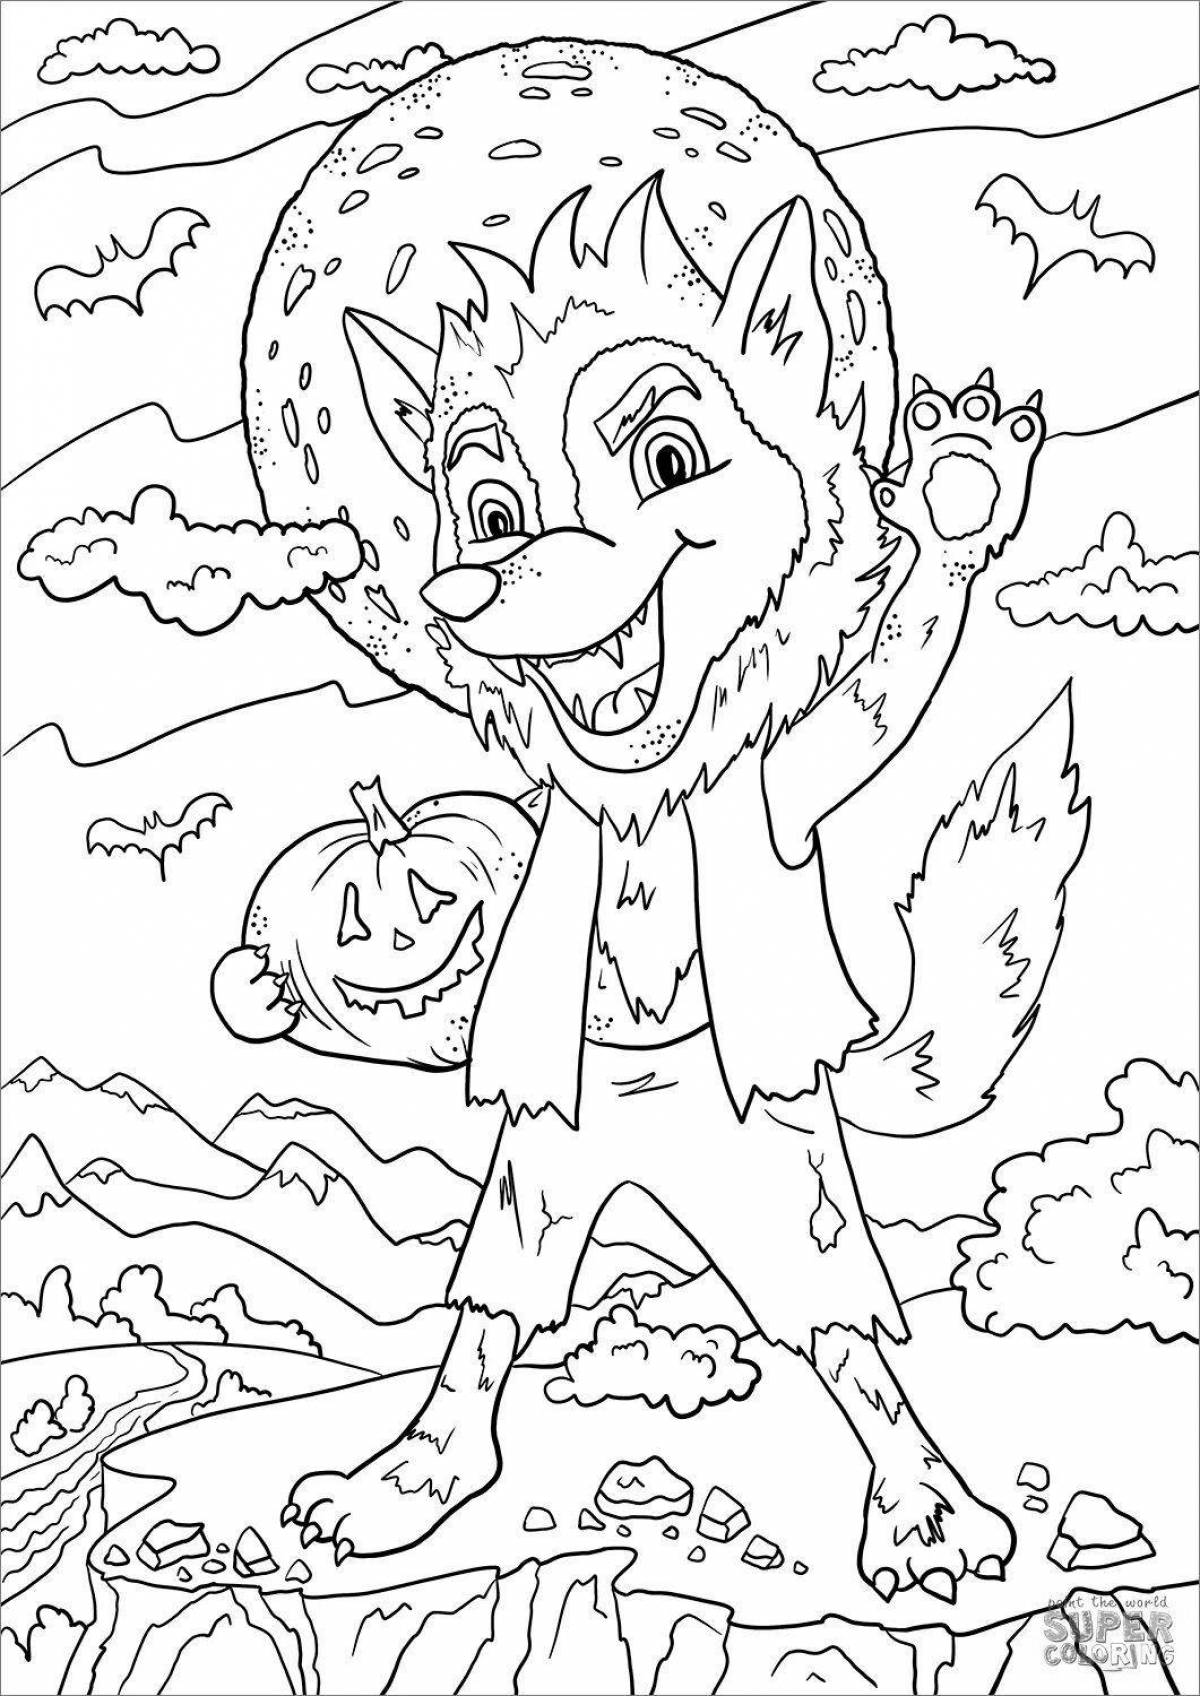 Shocking werewolf coloring book for kids